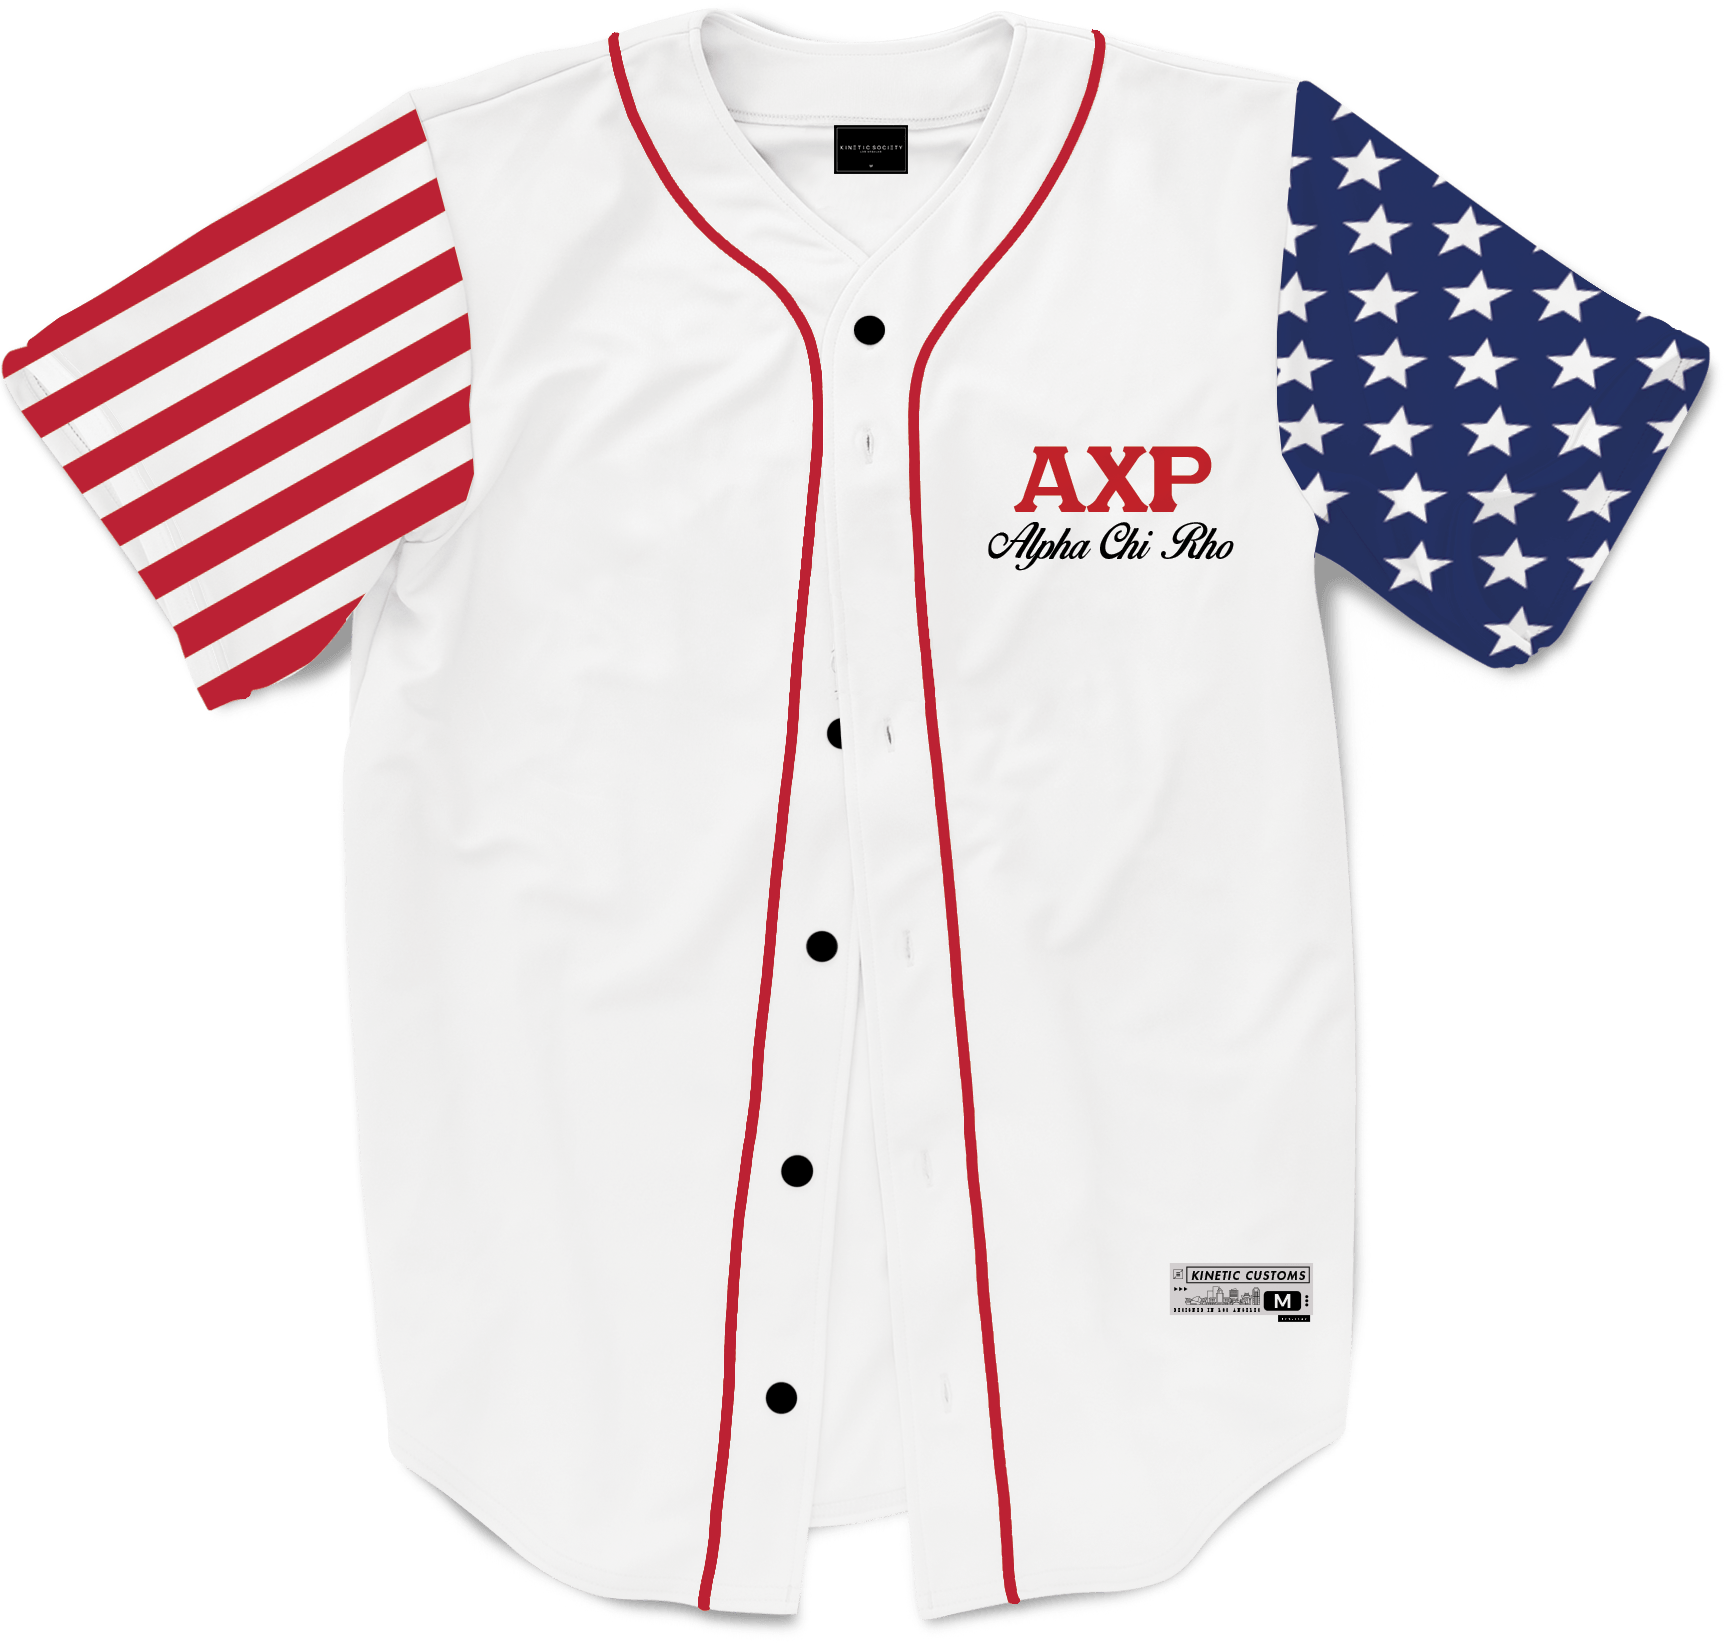 Alpha Chi Rho - Flagship Baseball Jersey - Kinetic Society